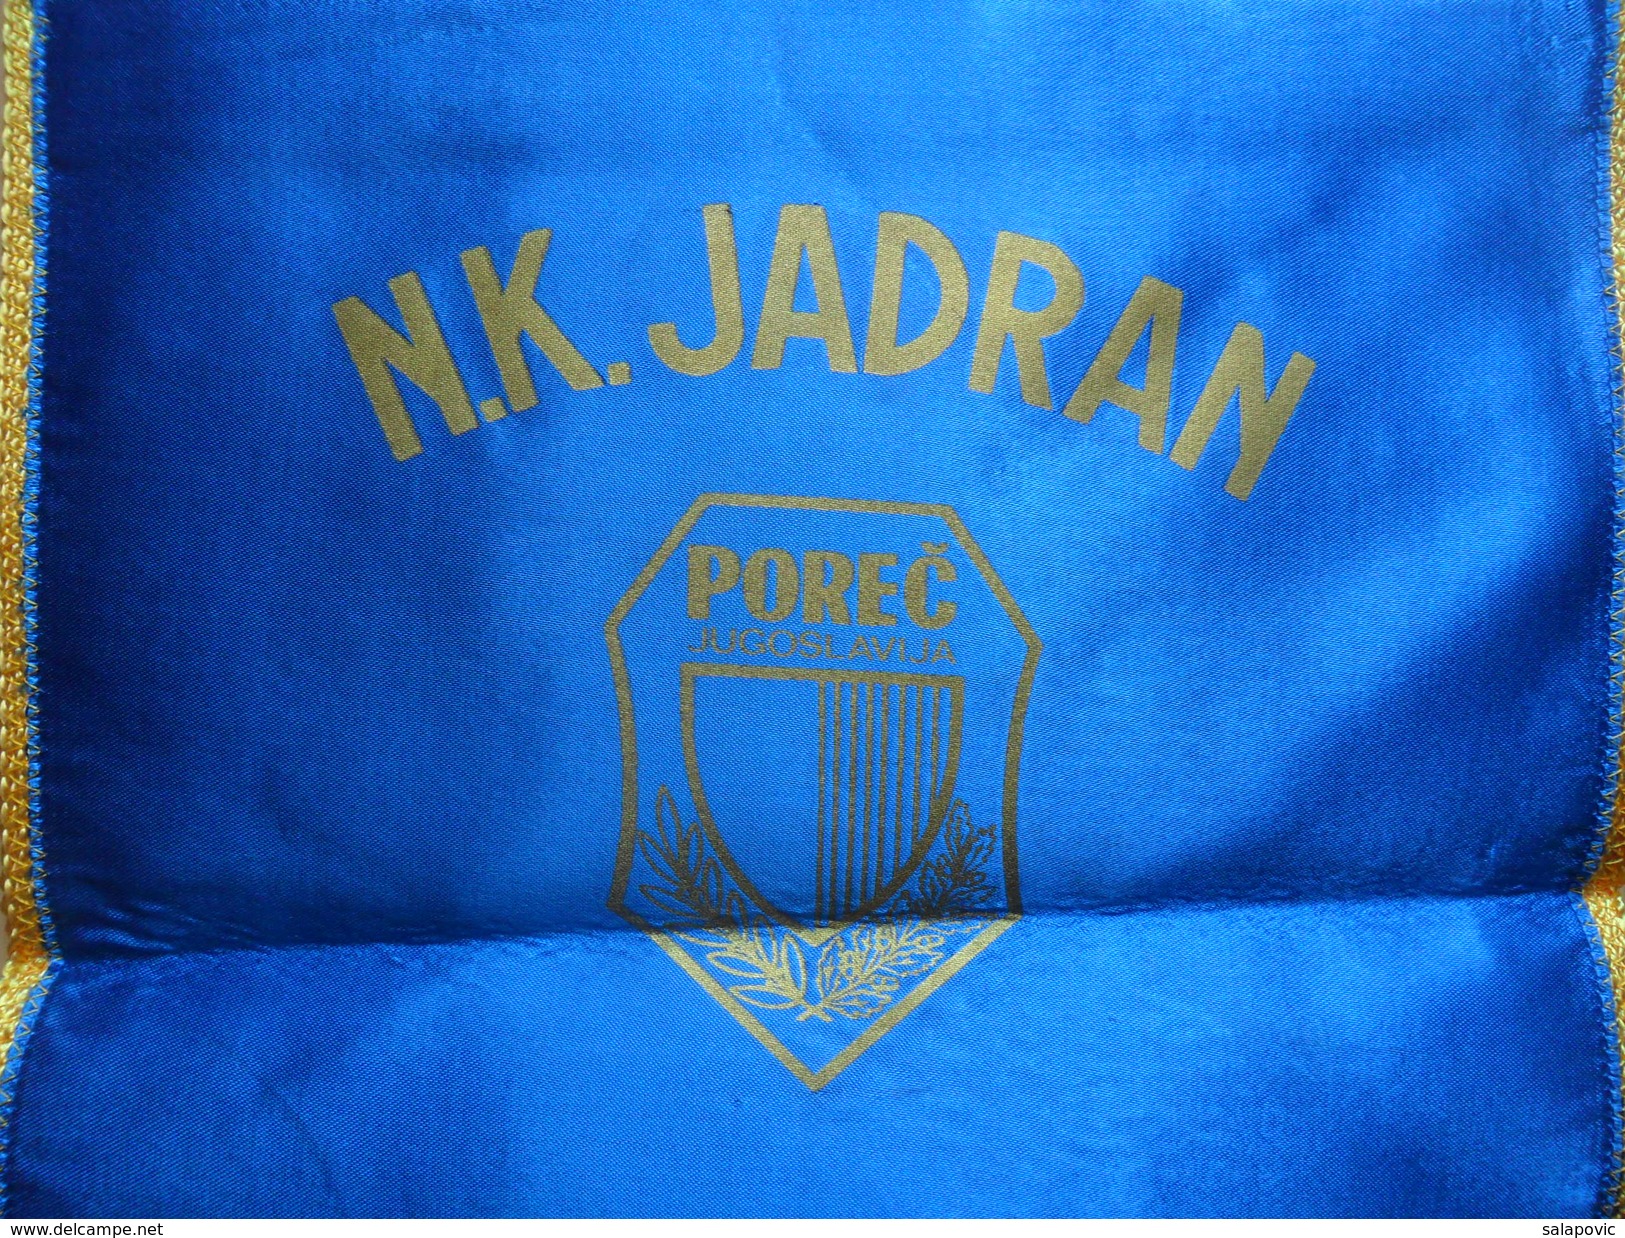 NK JADRAN, POREC, Croatia FOOTBALL CLUB, SOCCER / FUTBOL / CALCIO,  OLD PENNANT, SPORTS FLAG - Uniformes Recordatorios & Misc